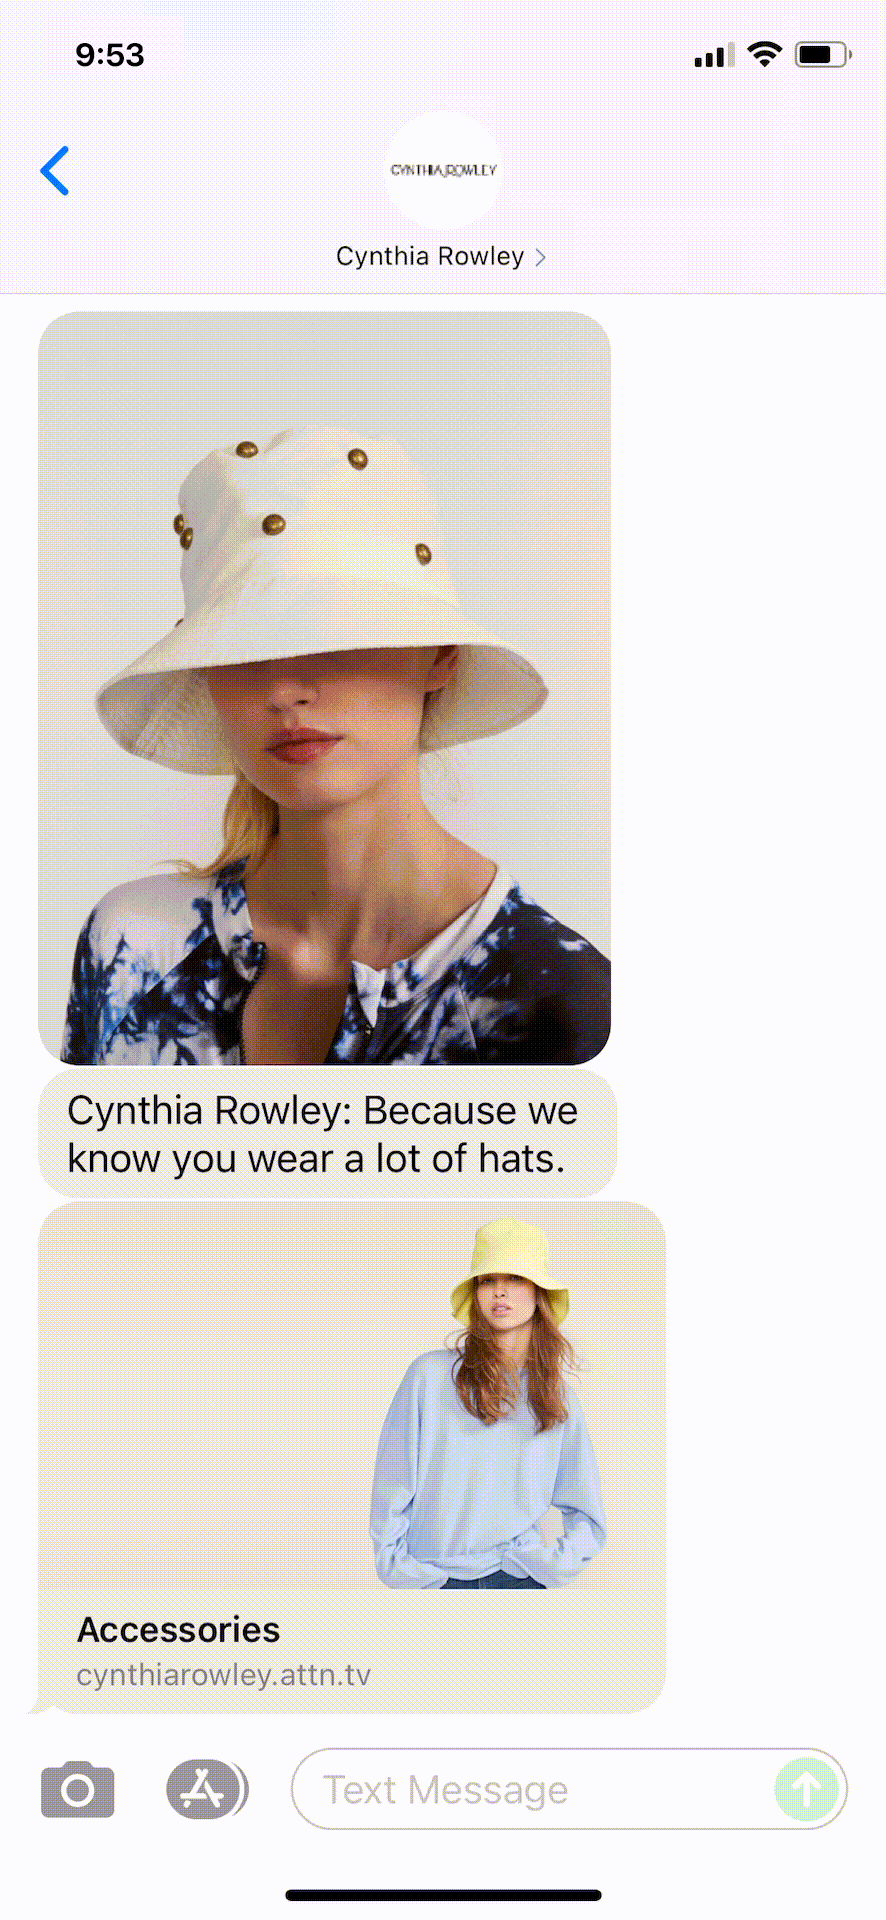 Cynthia-Rowley-Text-Message-Marketing-Example-06.17.2021